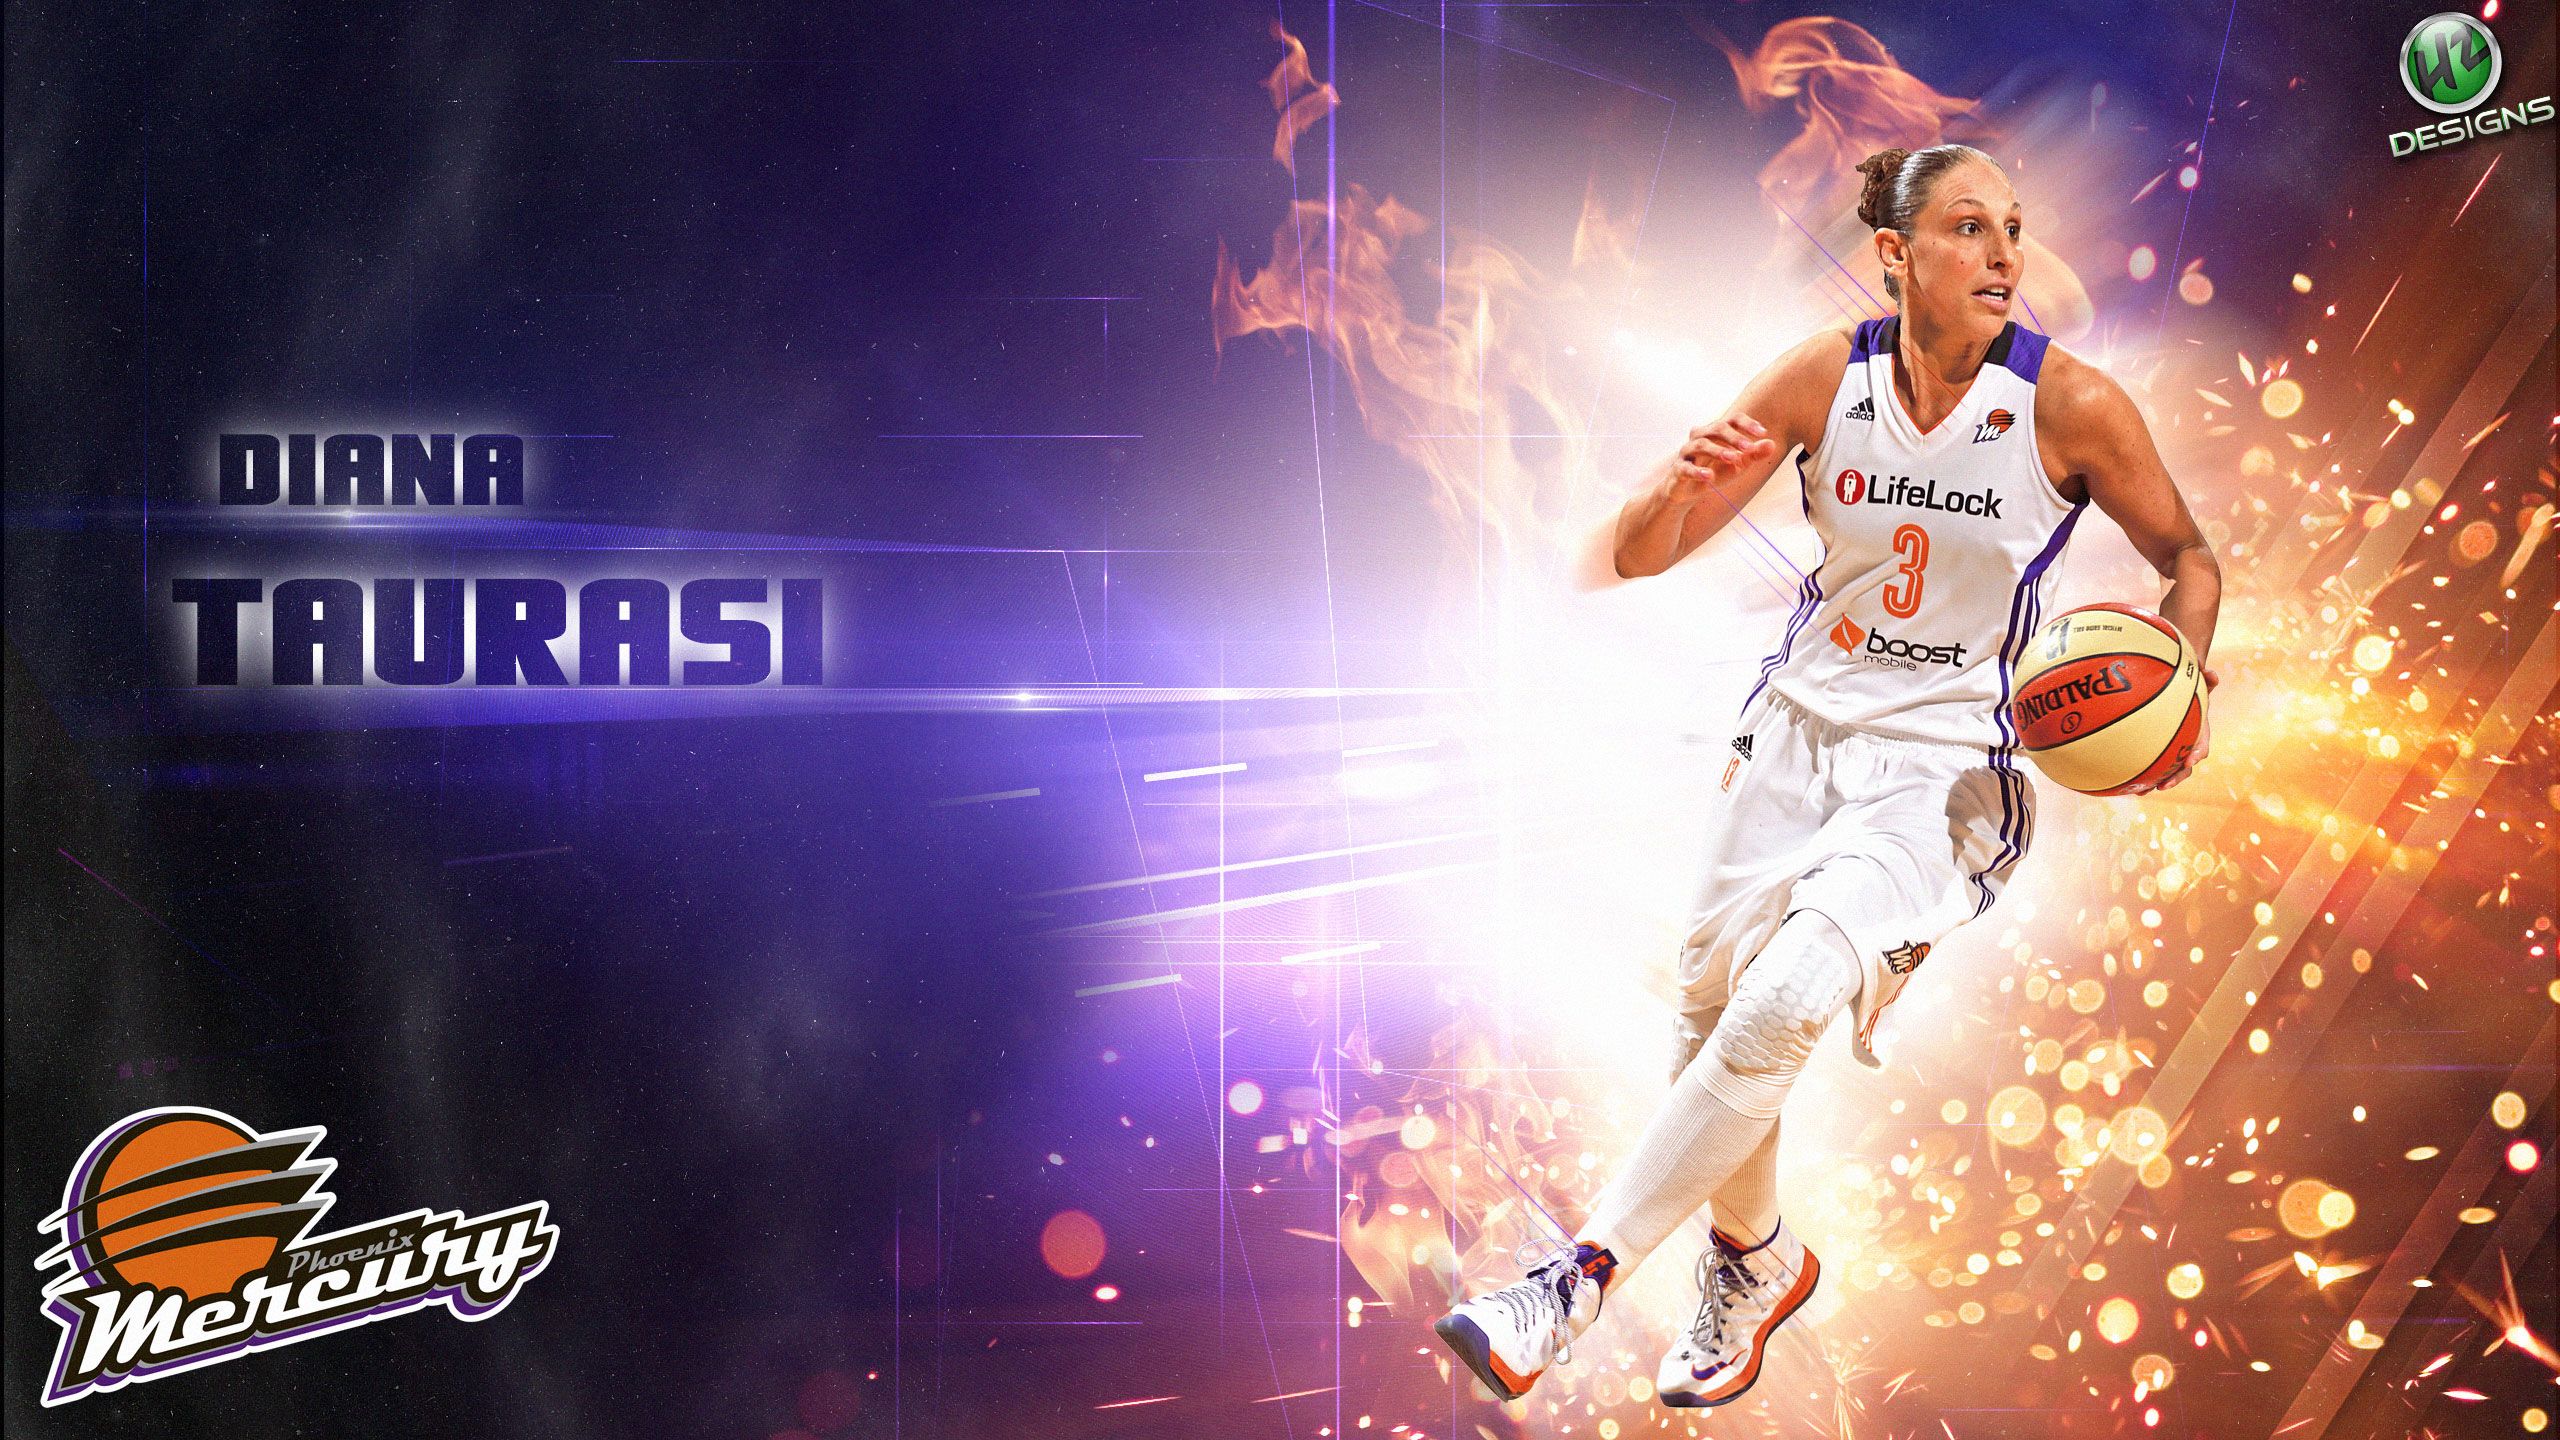 WNBA Wallpapers | Basketball Wallpapers at BasketWallpapers.com